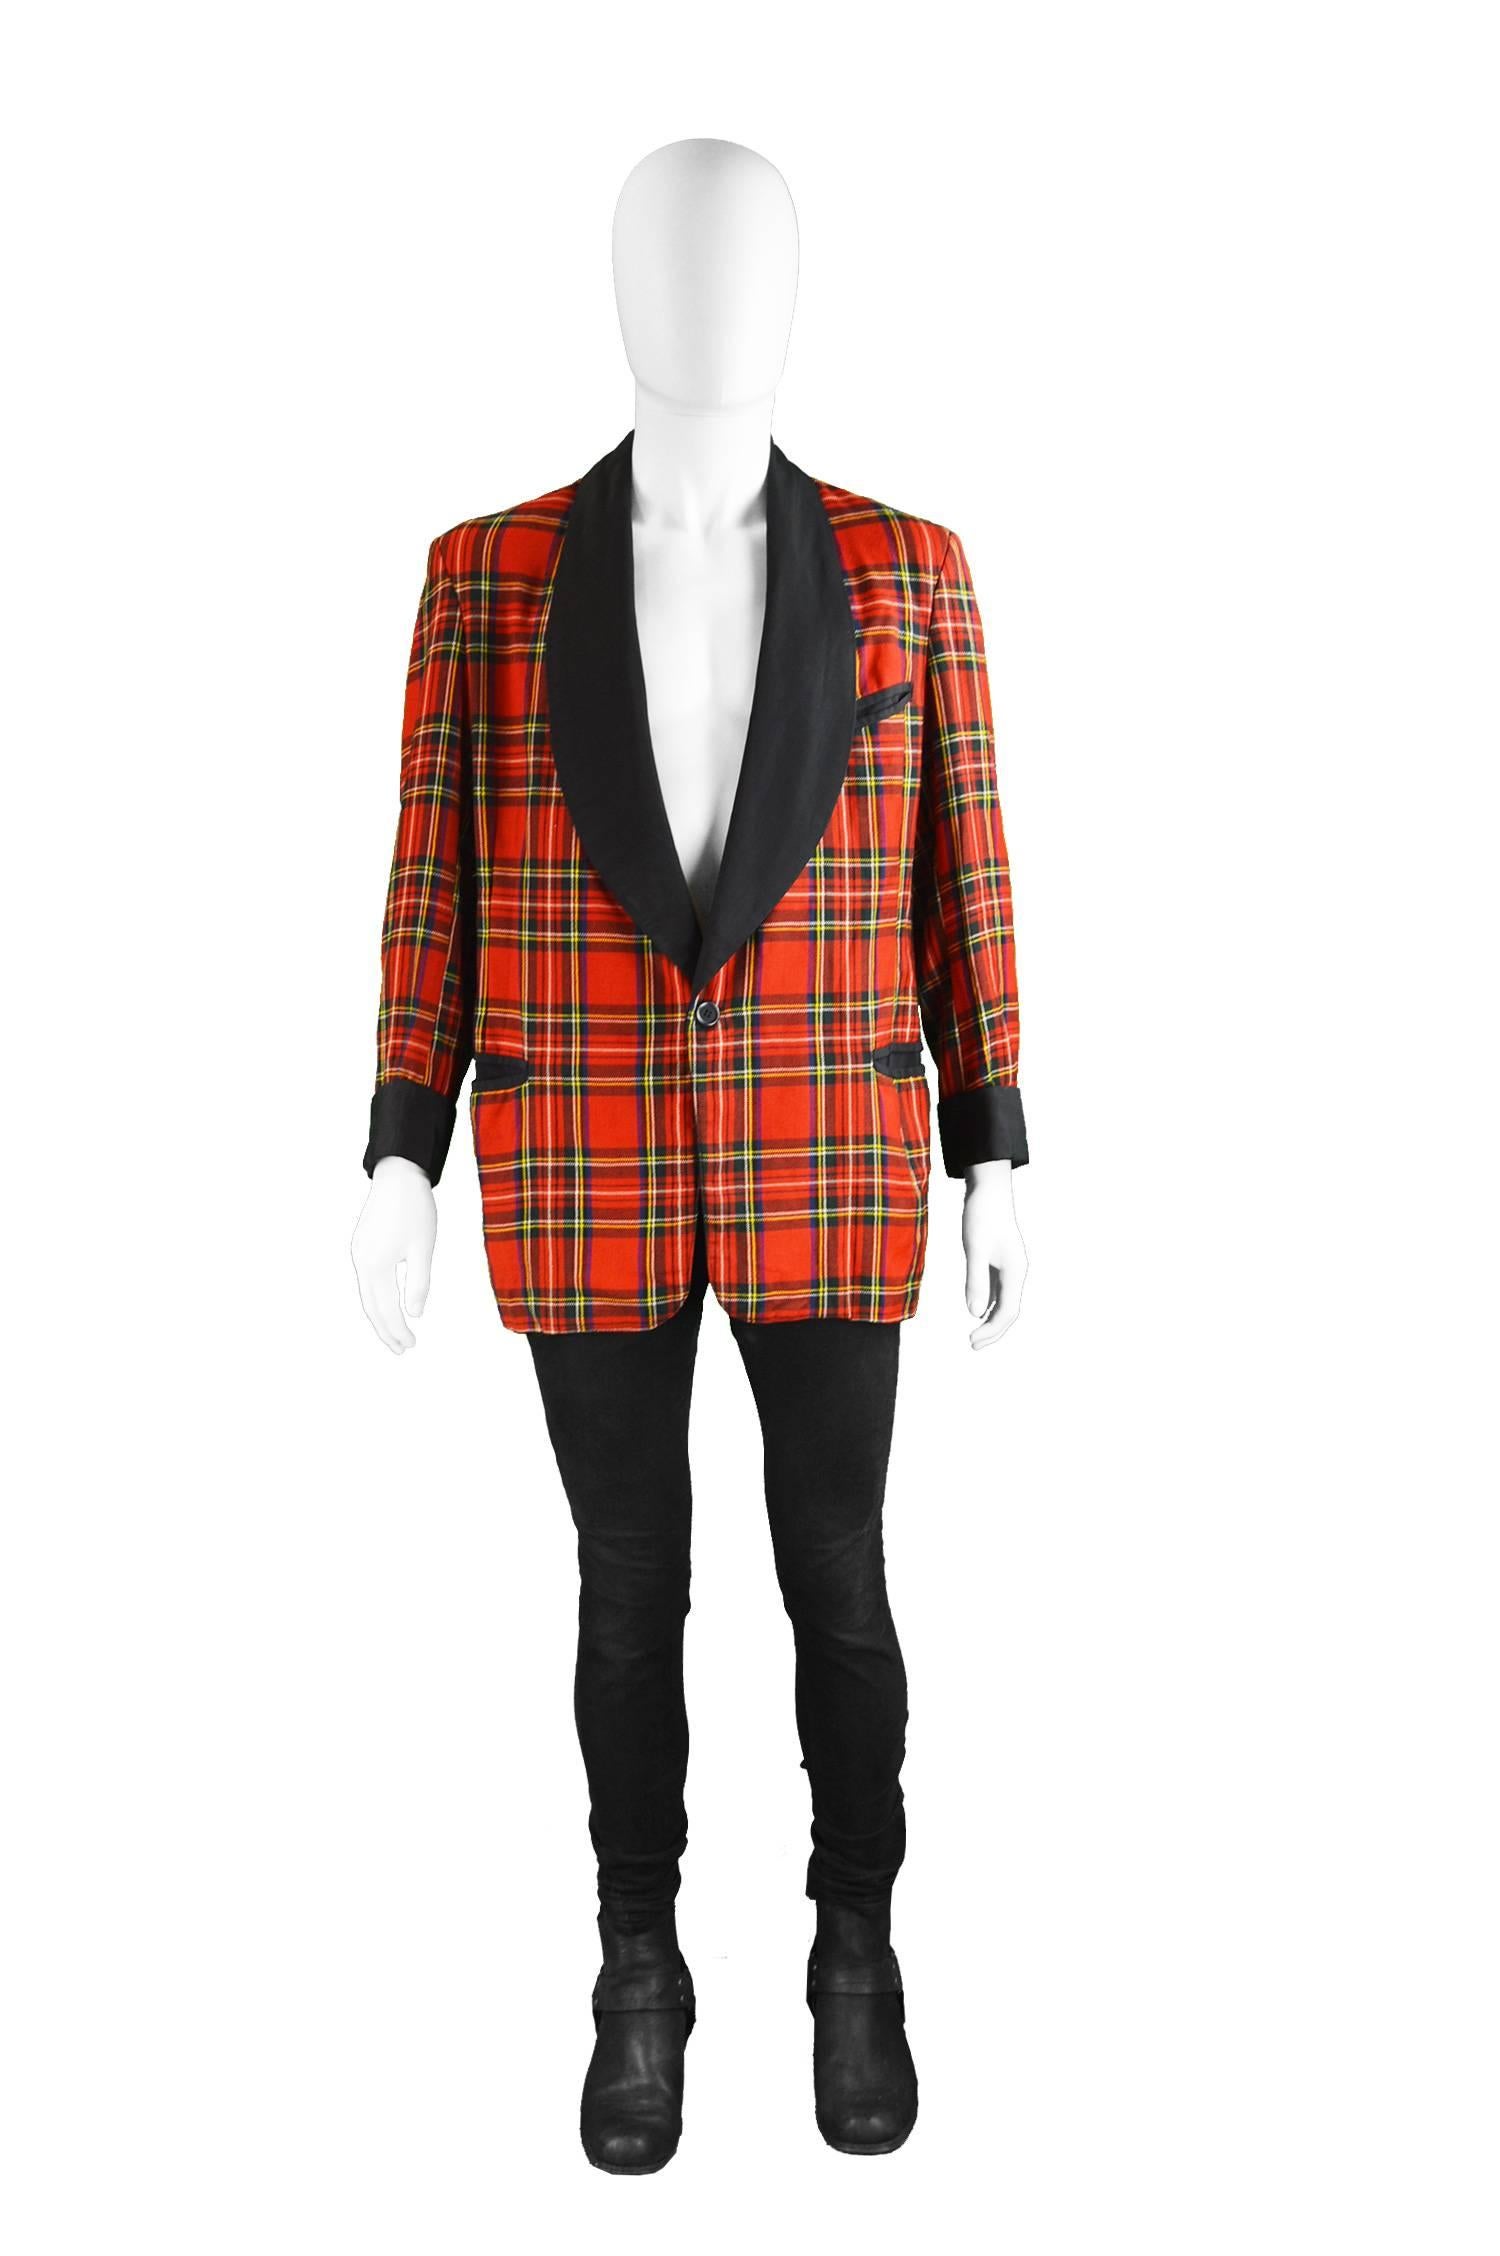 Vintage Men's Tartan Plaid Checked Drape Jacket by Joseph Horne, 1960s

Estimated Size: men's XL. Please check measurements. 
Chest - 46” / 117cm (please allow a couple of inches room for movement)
Length (Shoulder to Hem) - 29” / 73cm
Shoulder to